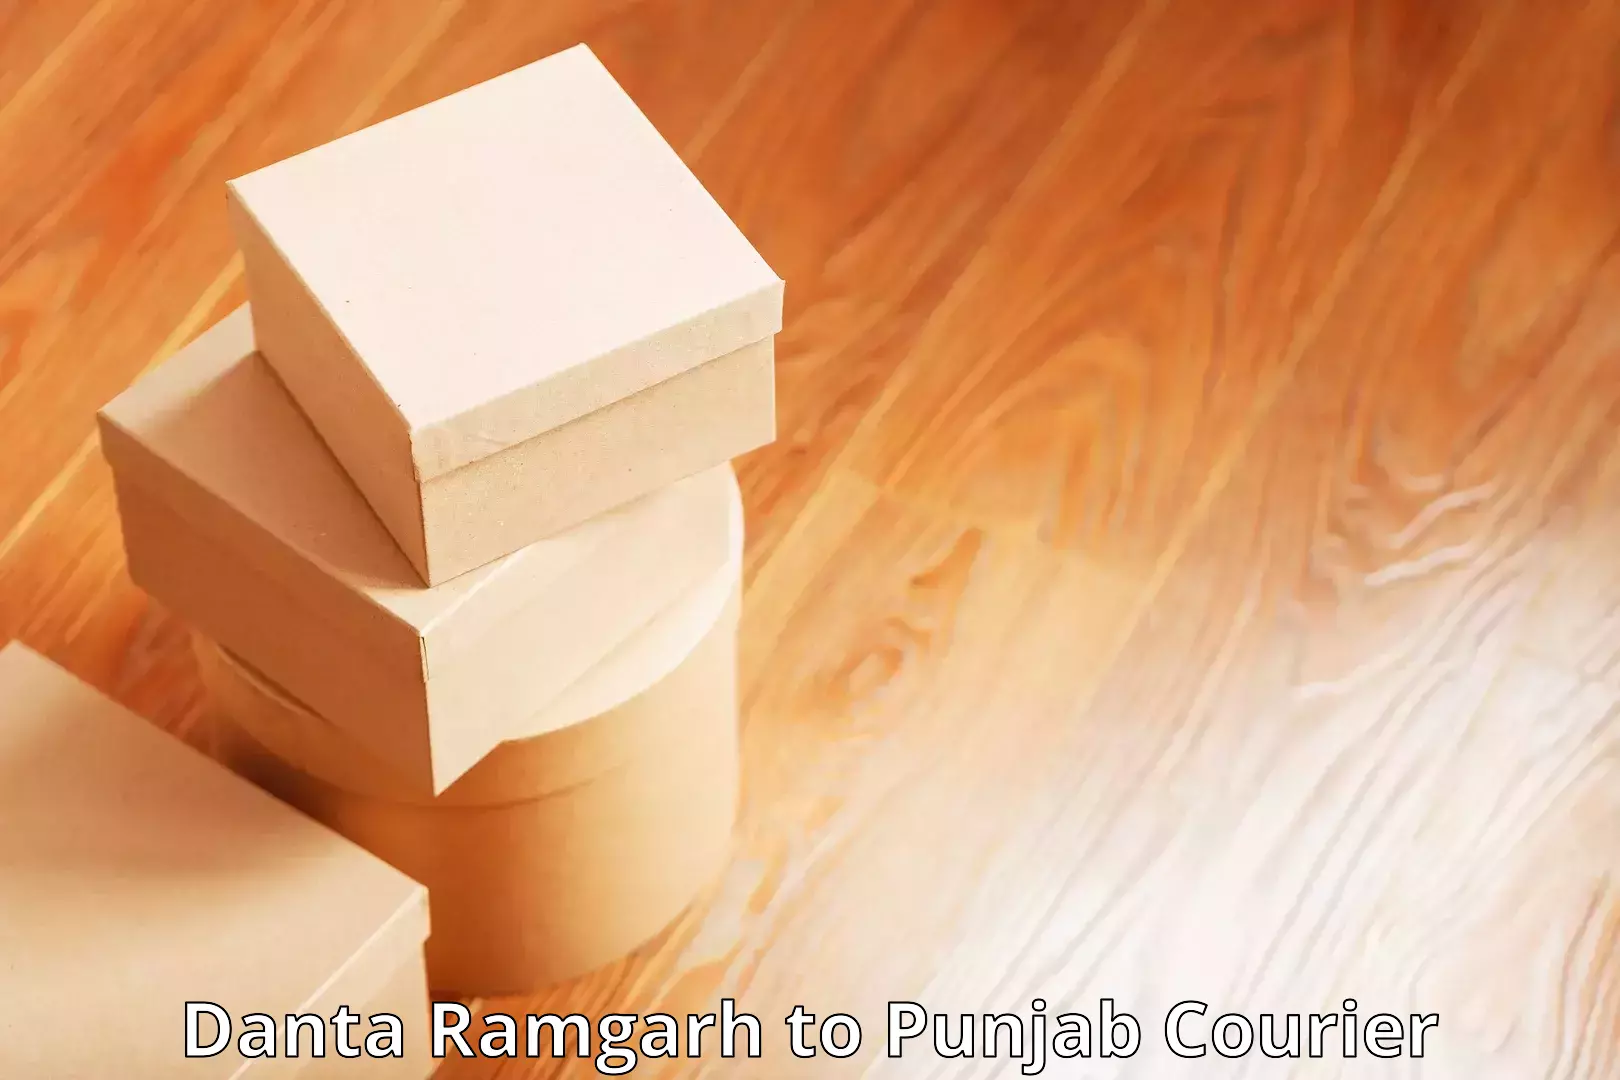 Same-day delivery options Danta Ramgarh to Faridkot